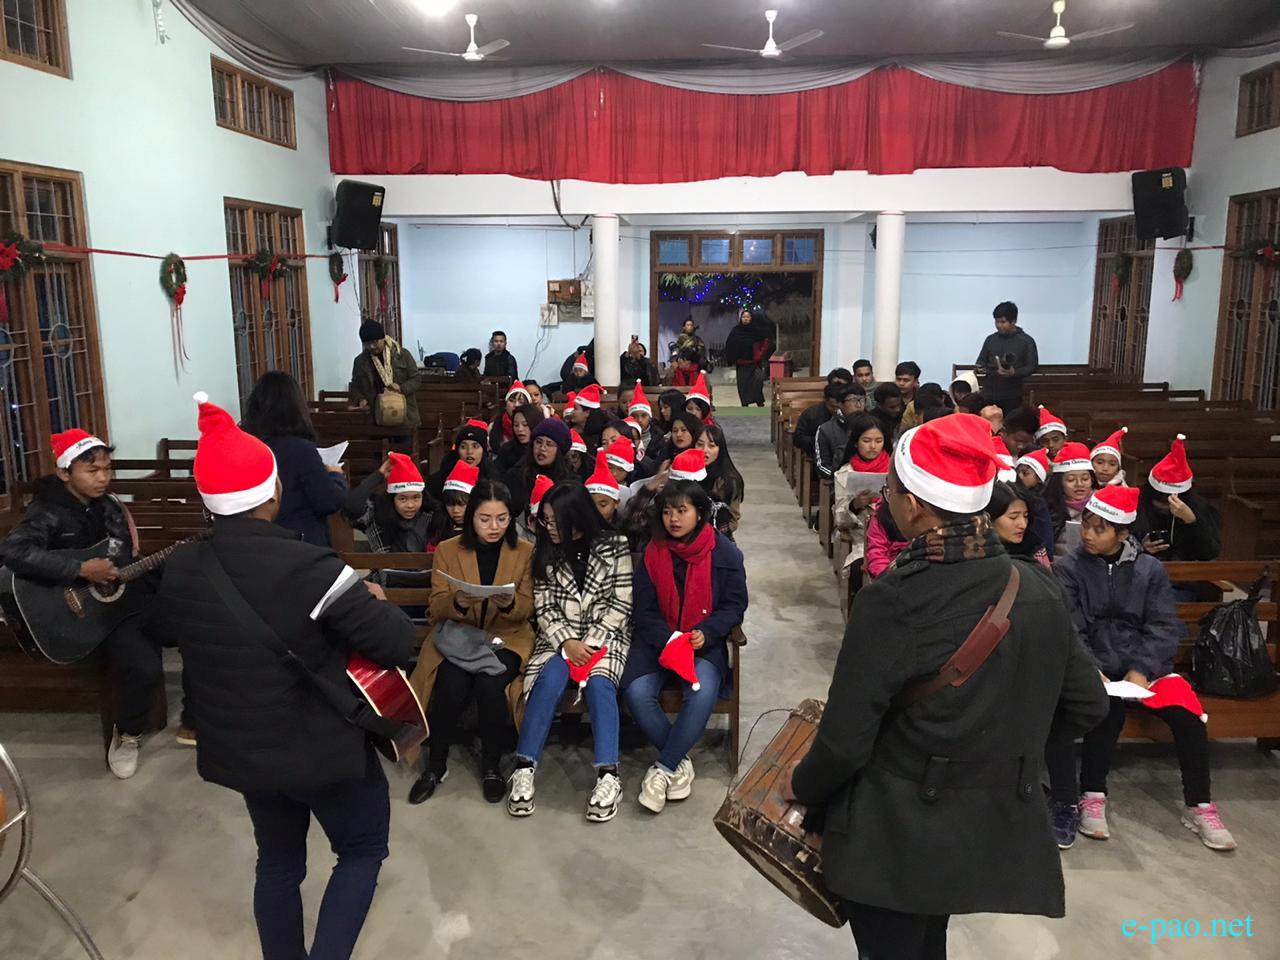 Christmas celebrated at Kachai Baptist Church, Ukhrul / Chawla Village, Kangpokpi :: December 25th 2019